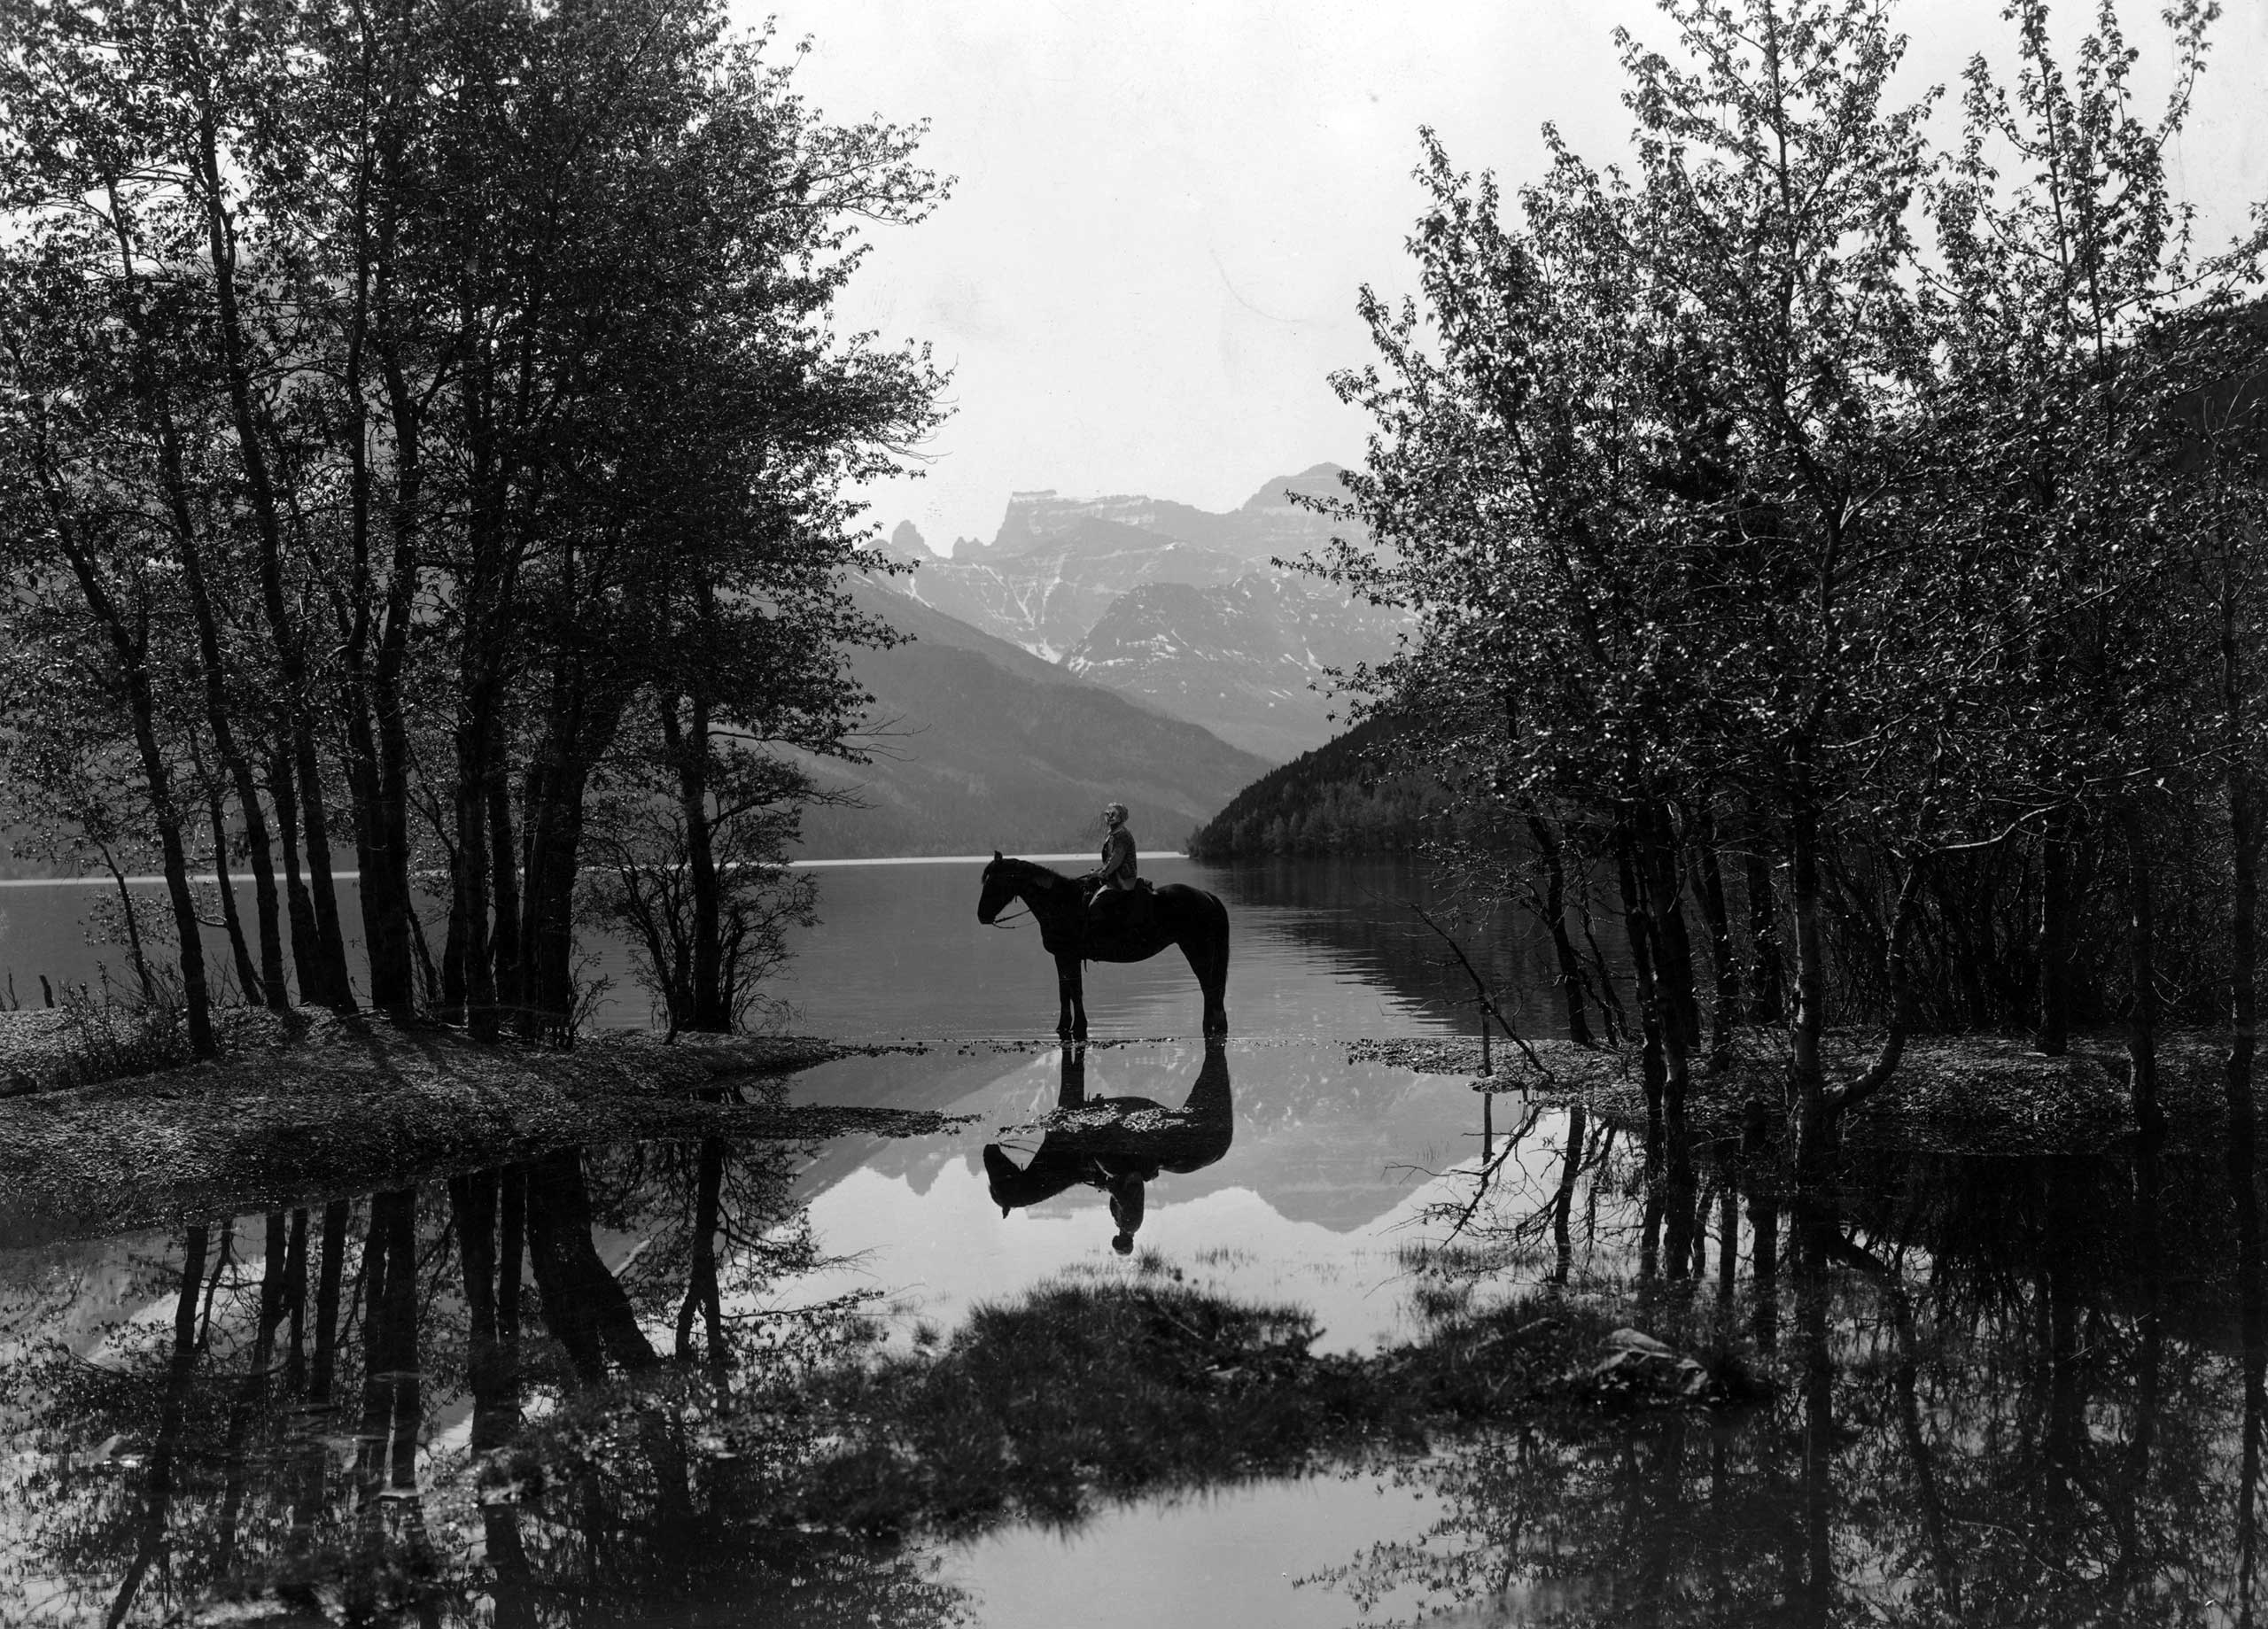 A rider on horseback in Waterton Lakes National Park, British Columbia circa 1930.